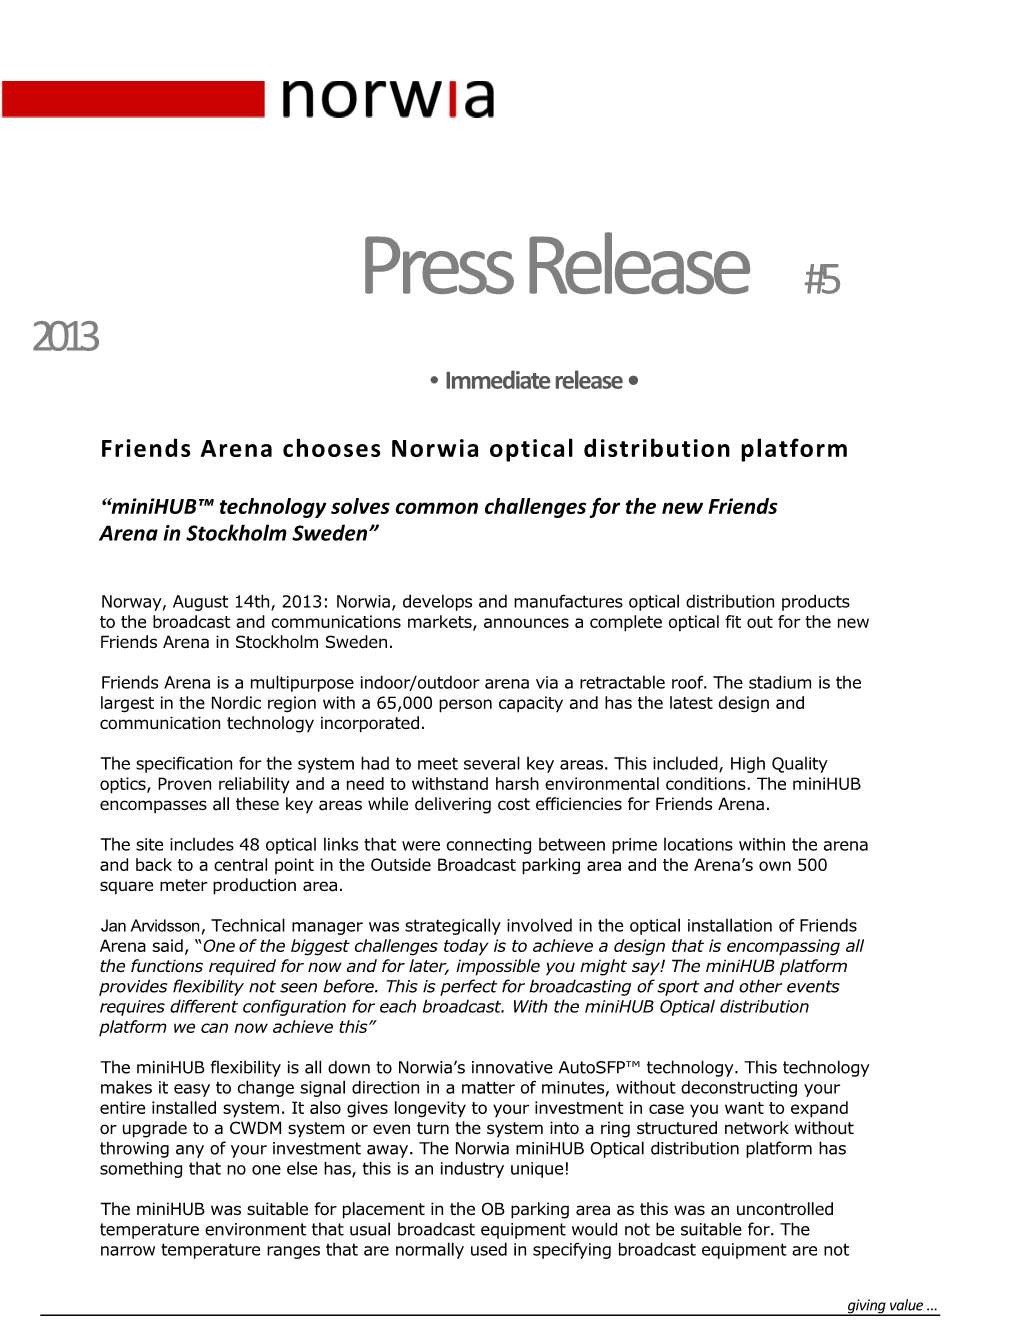 Friends Arena Chooses Norwia Optical Distribution Platform